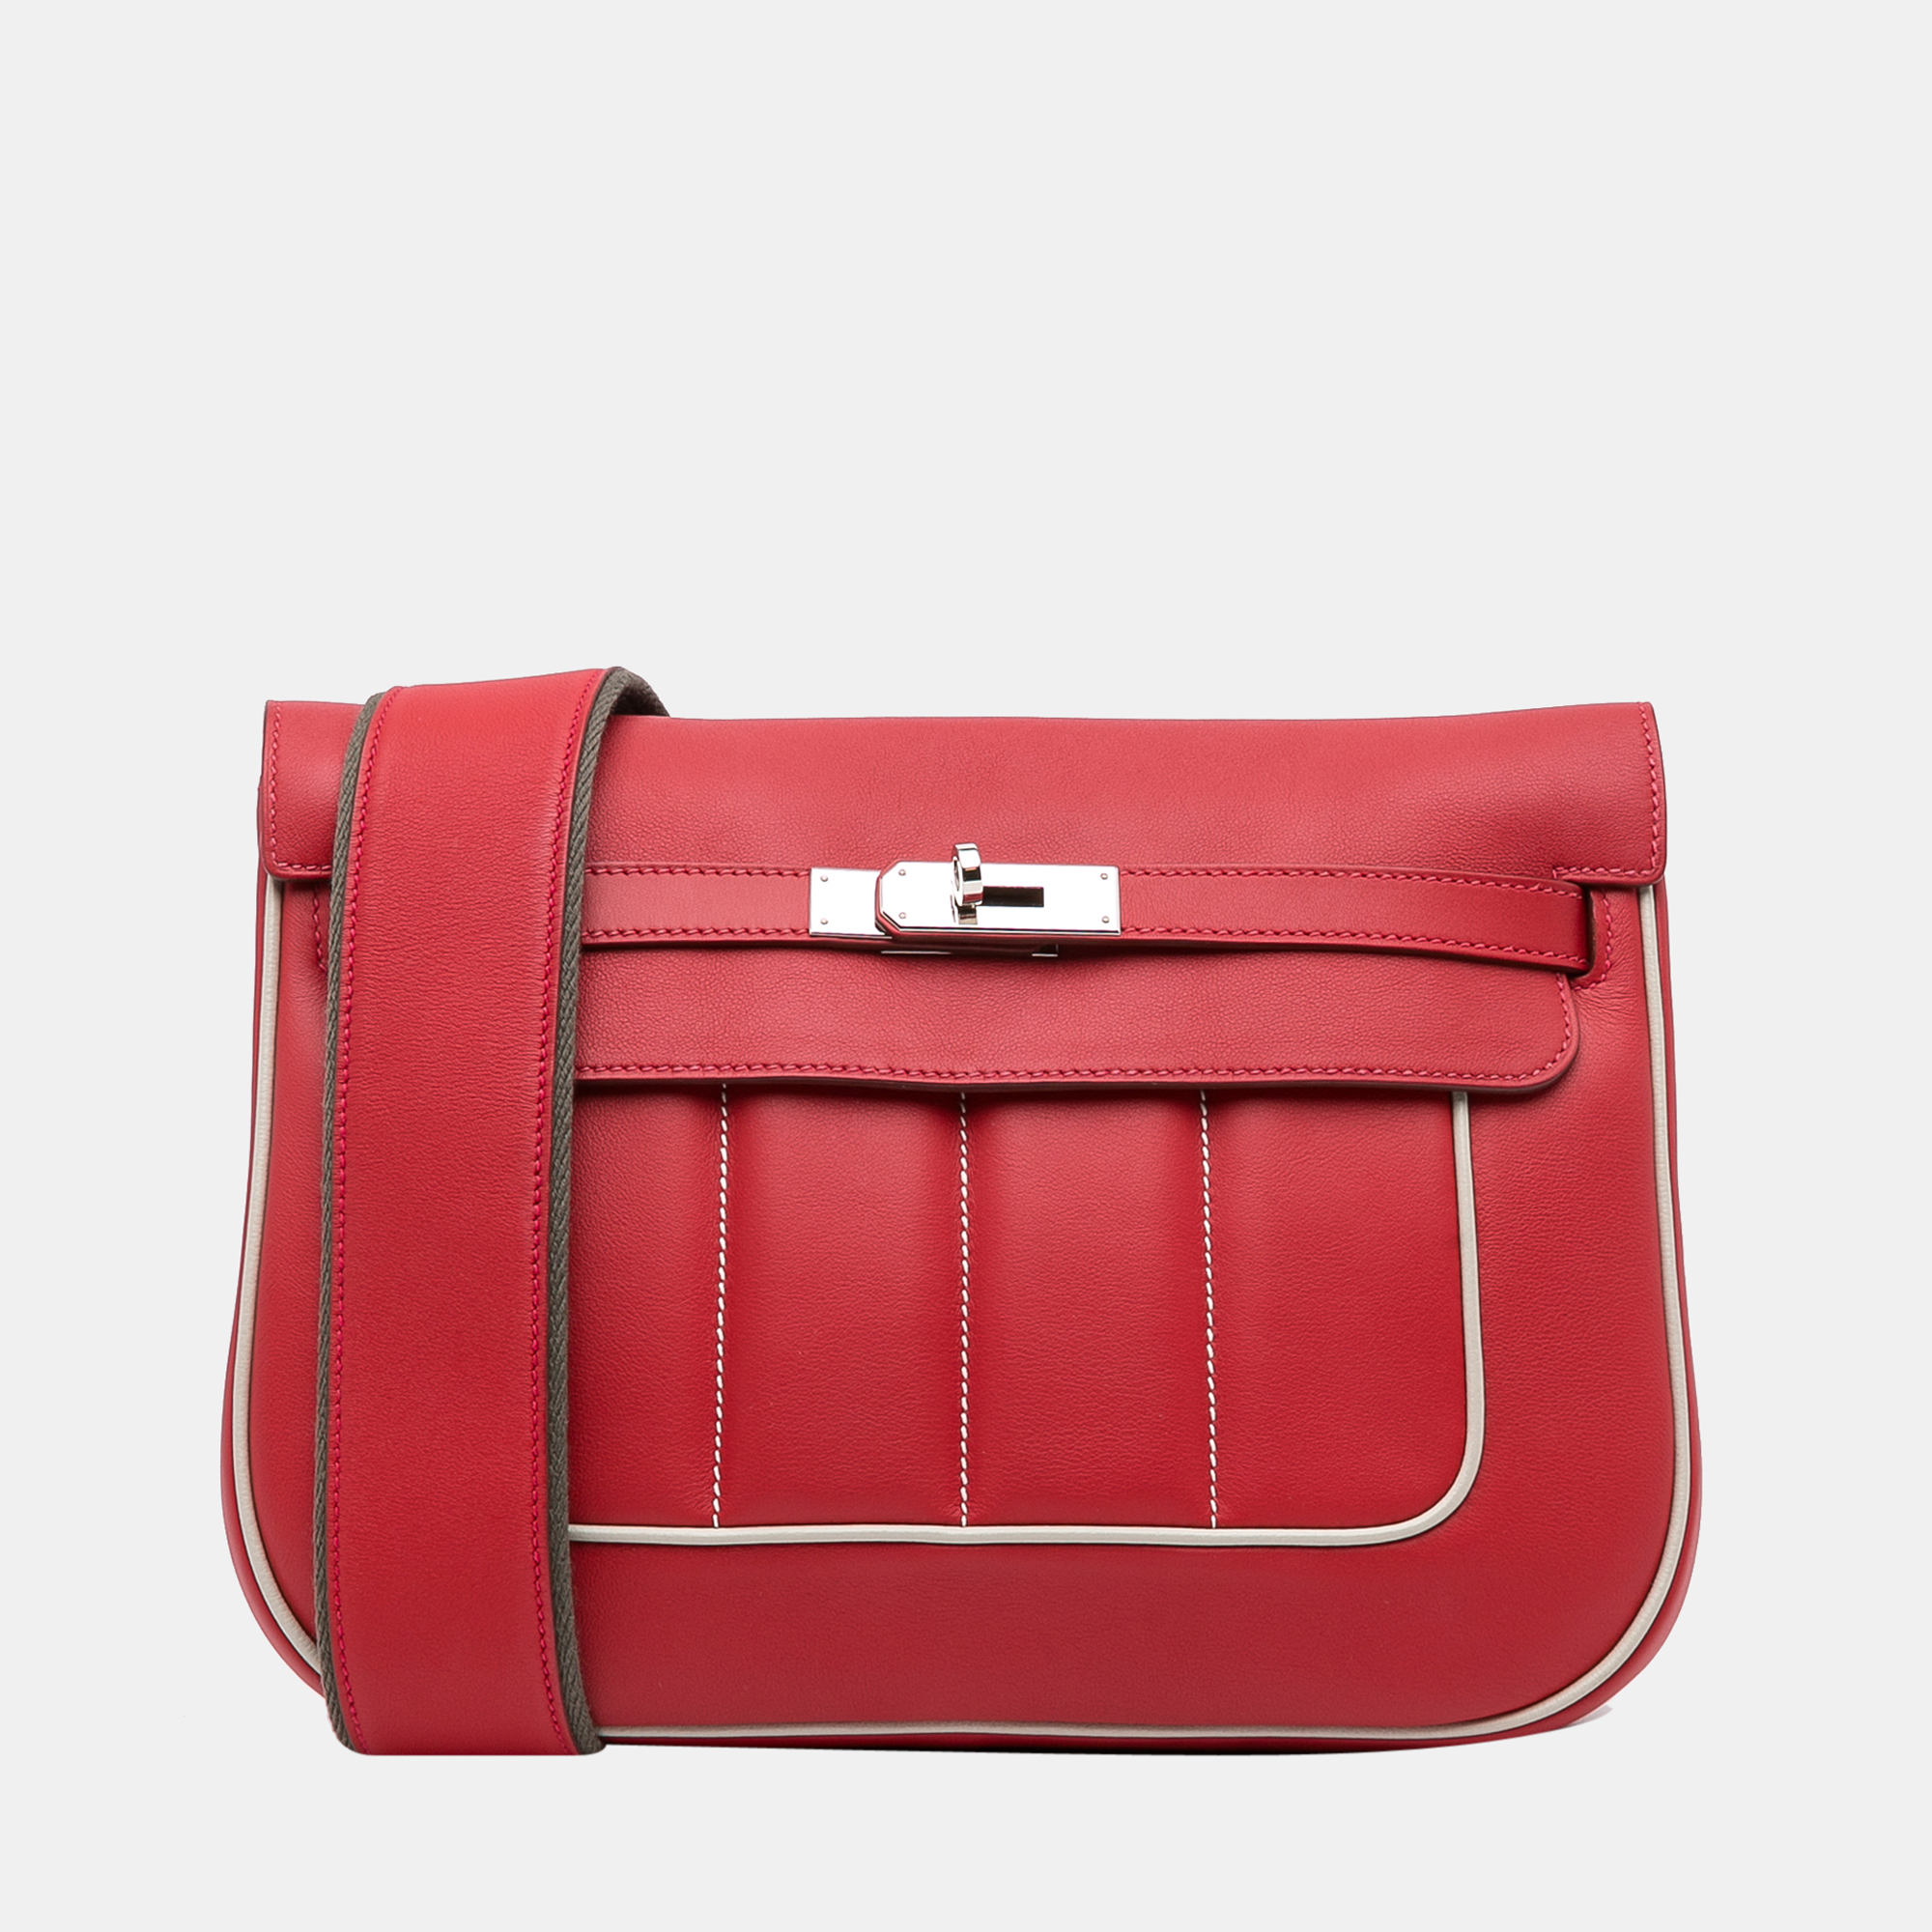 Hermès Berline Handbag in Red Swift Leather